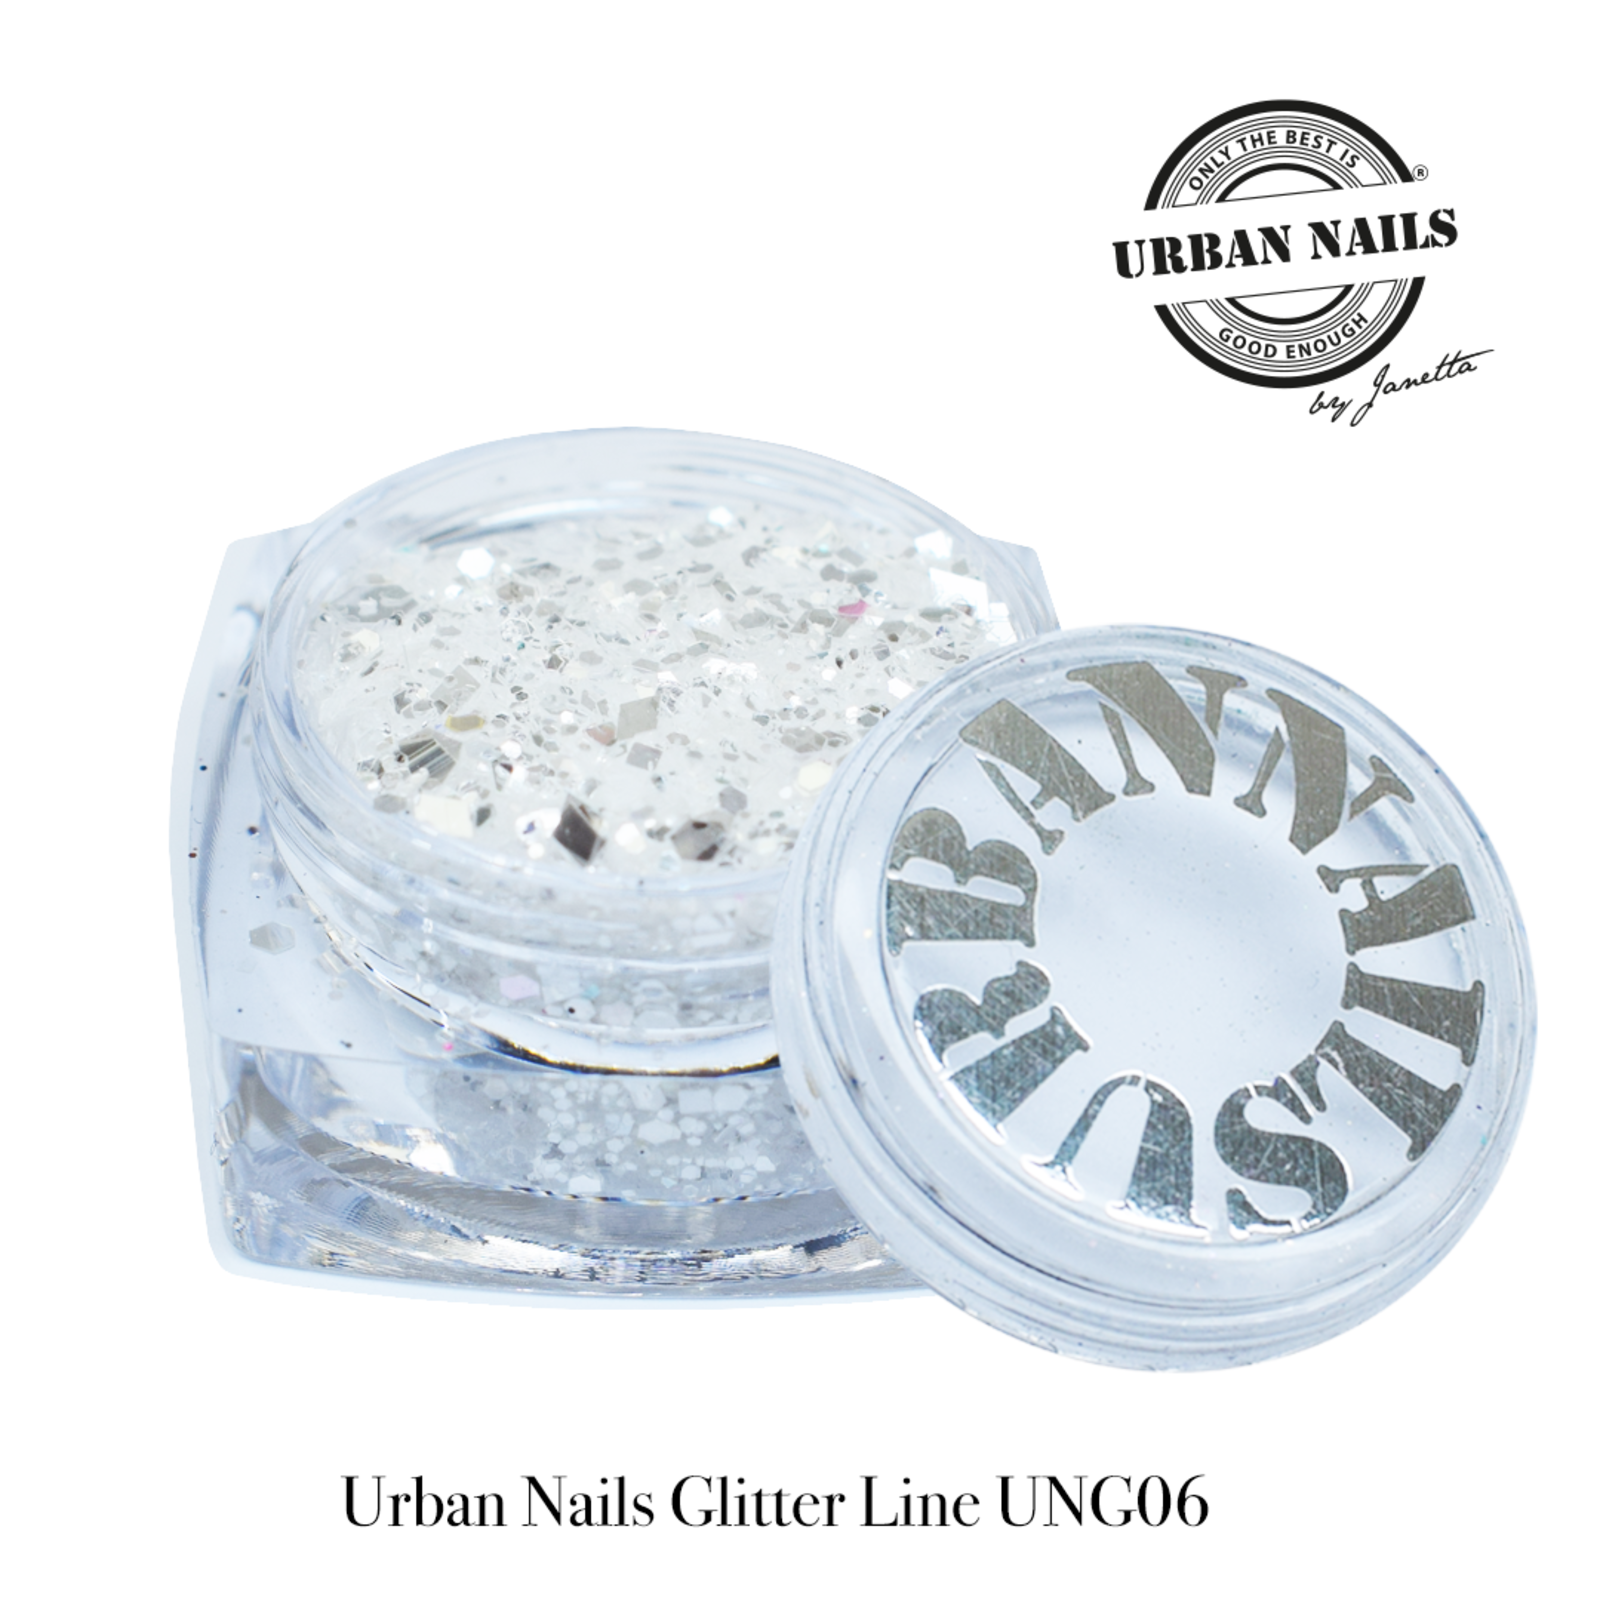 Urban nails Glitter Line UNG6